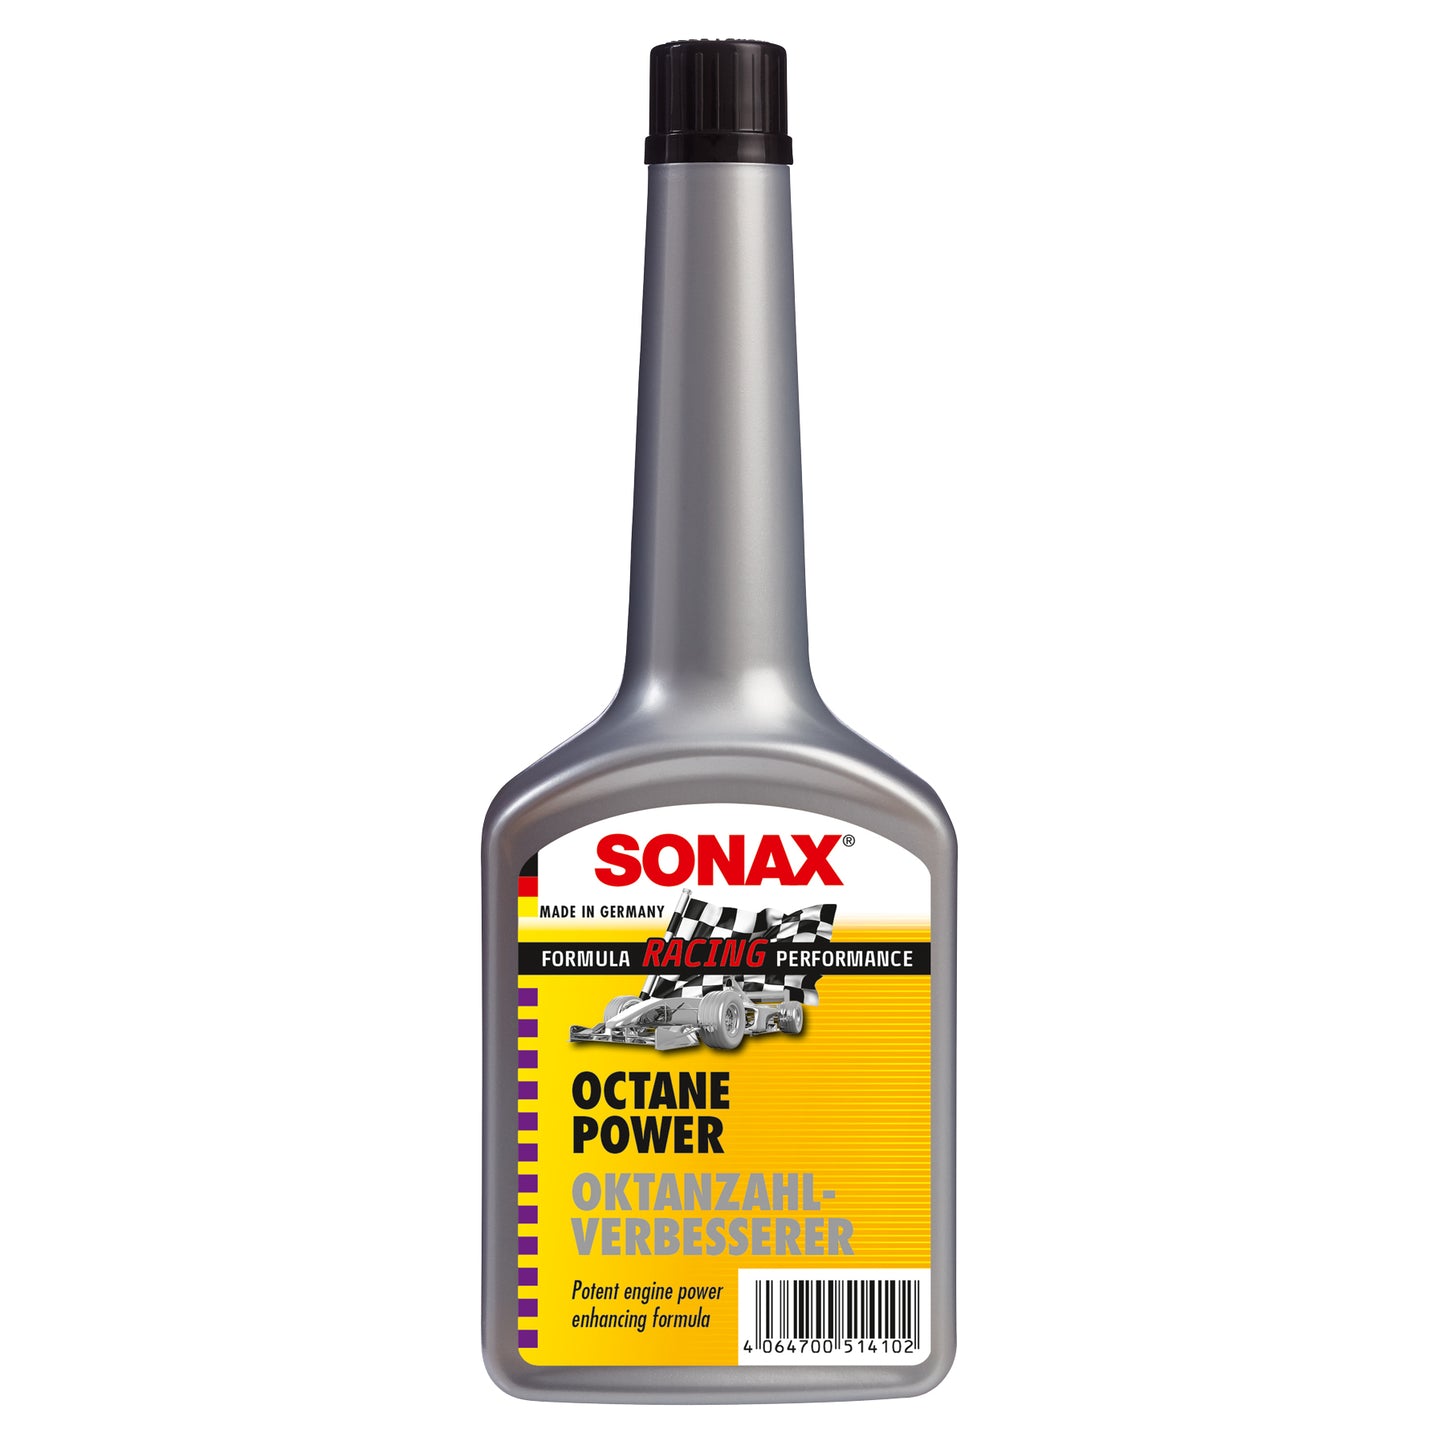 SONAX Octane Power 250ml *SALE*